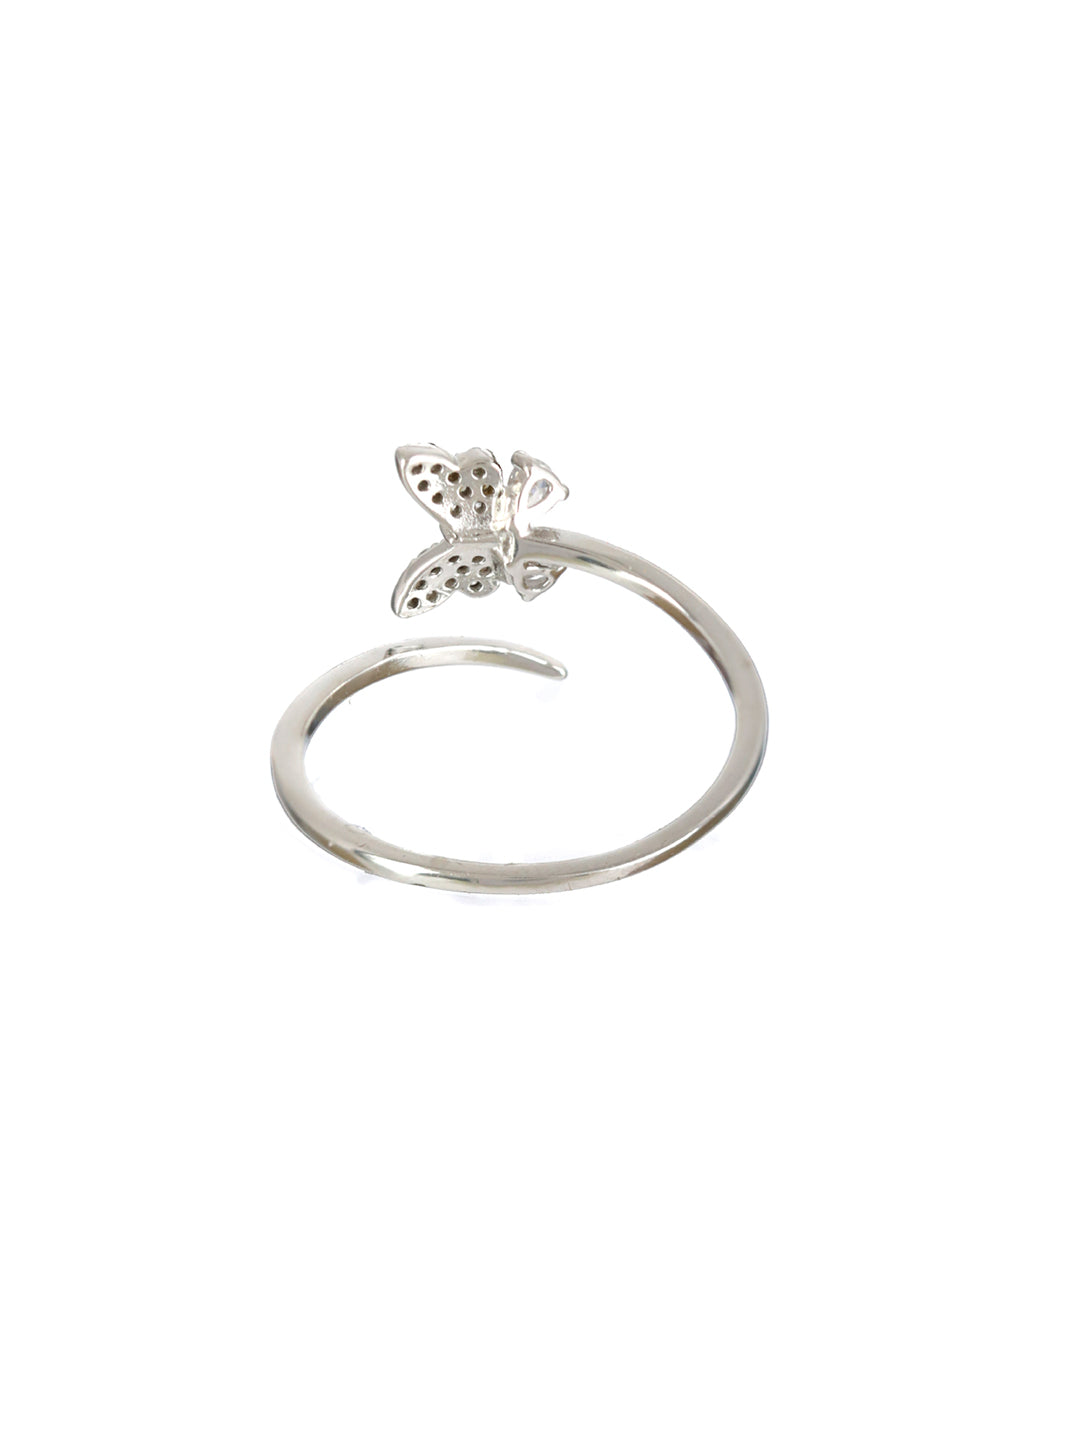 Sheer by Priyaasi Butterfly American Diamond Sterling Silver Ring